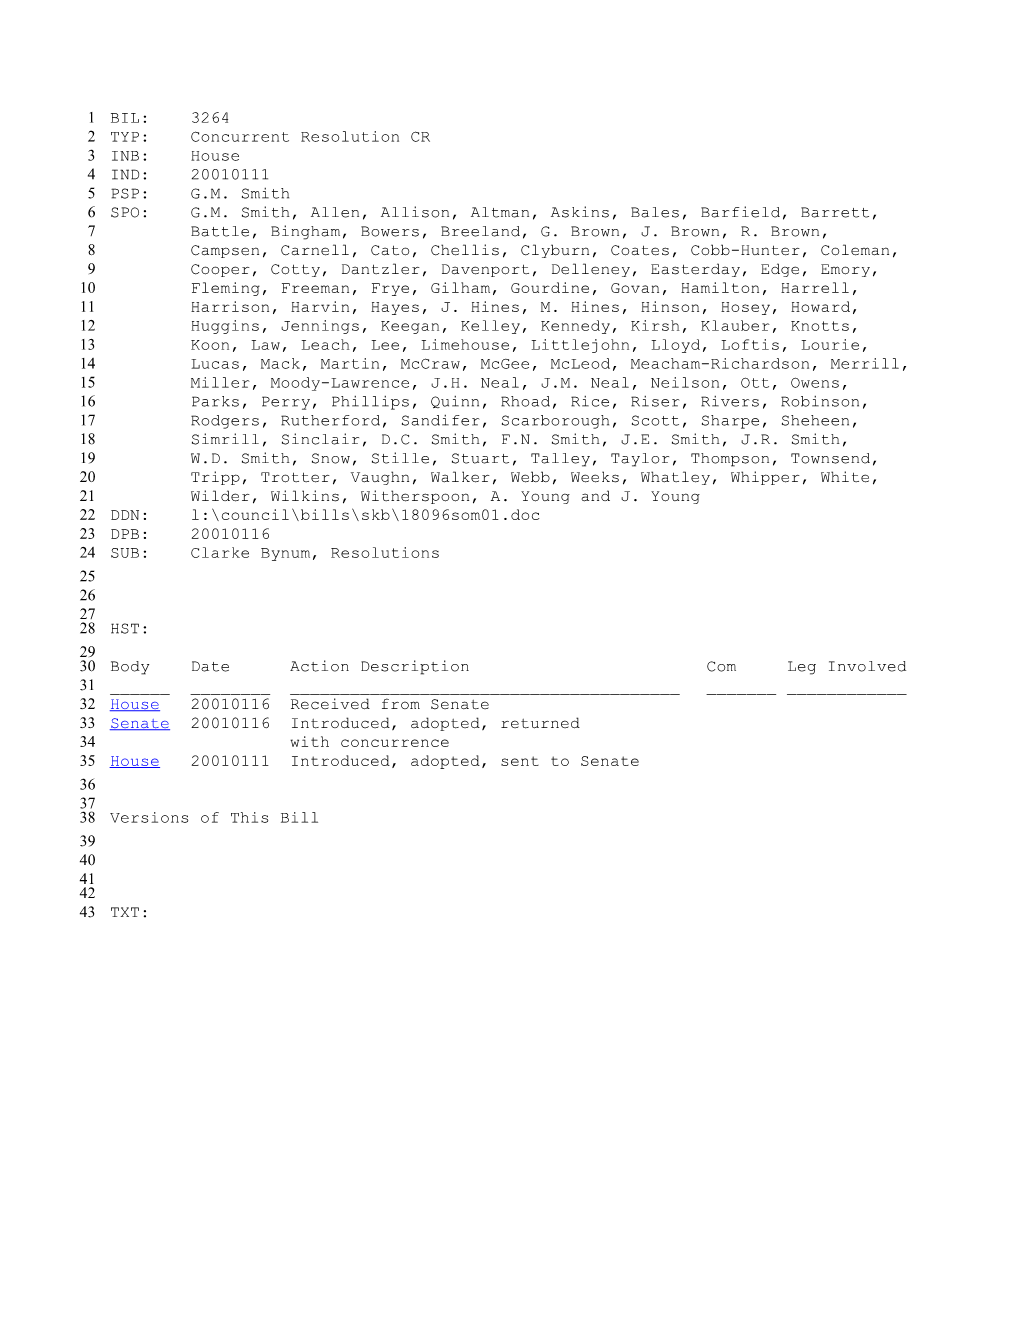 2001-2002 Bill 3264: Clarke Bynum, Resolutions - South Carolina Legislature Online